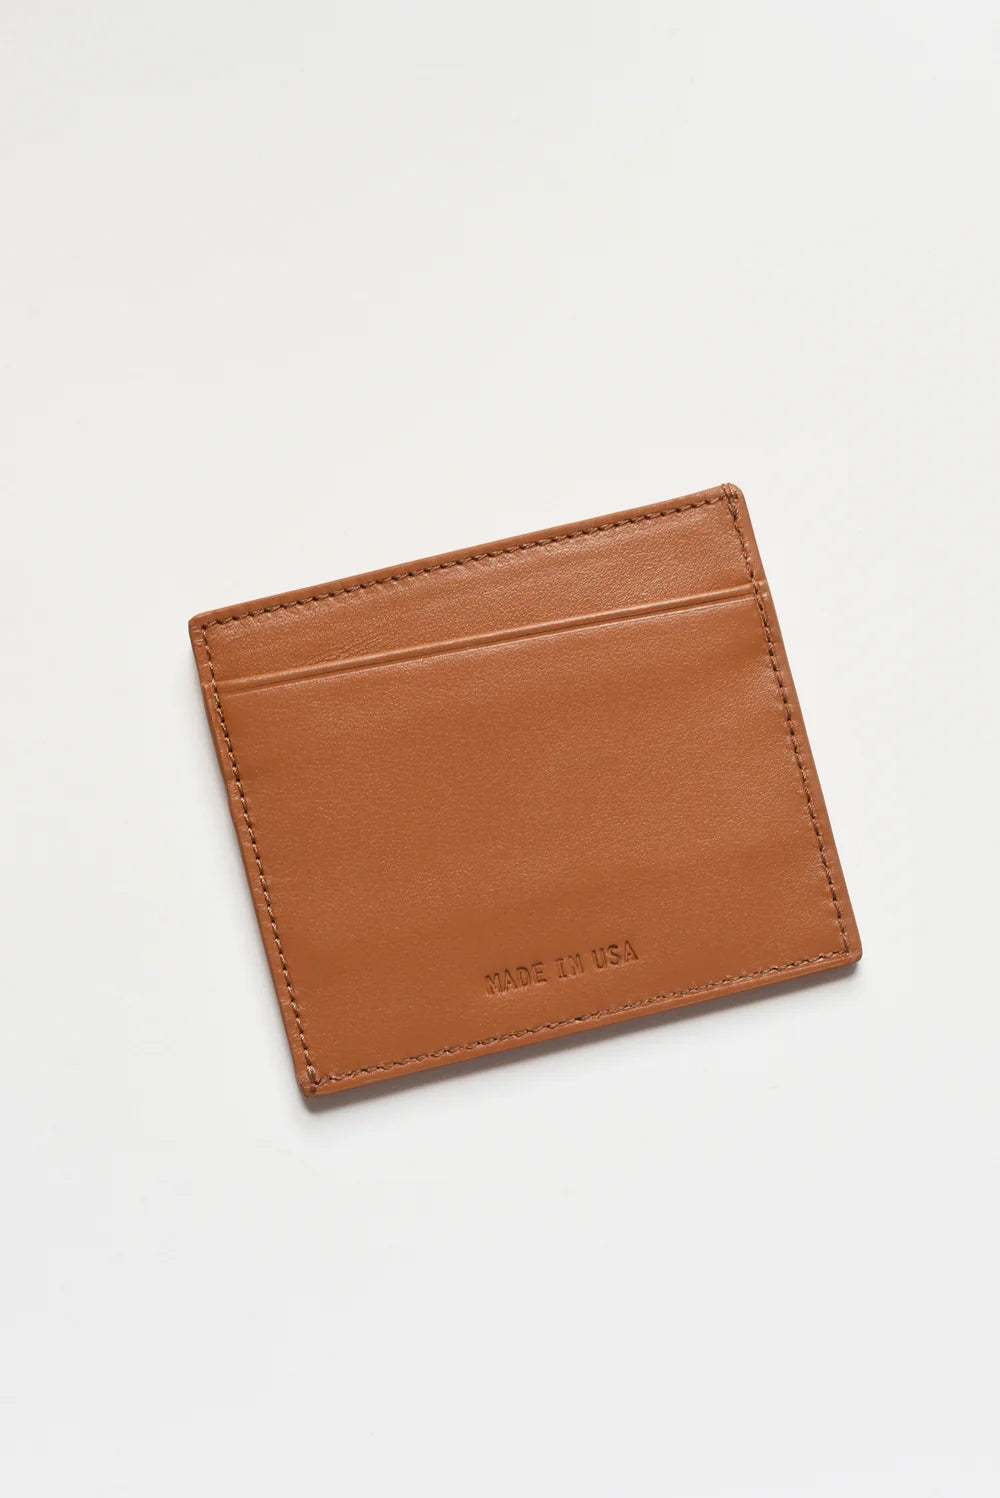 8.6.4 :: Card Case/Wallet